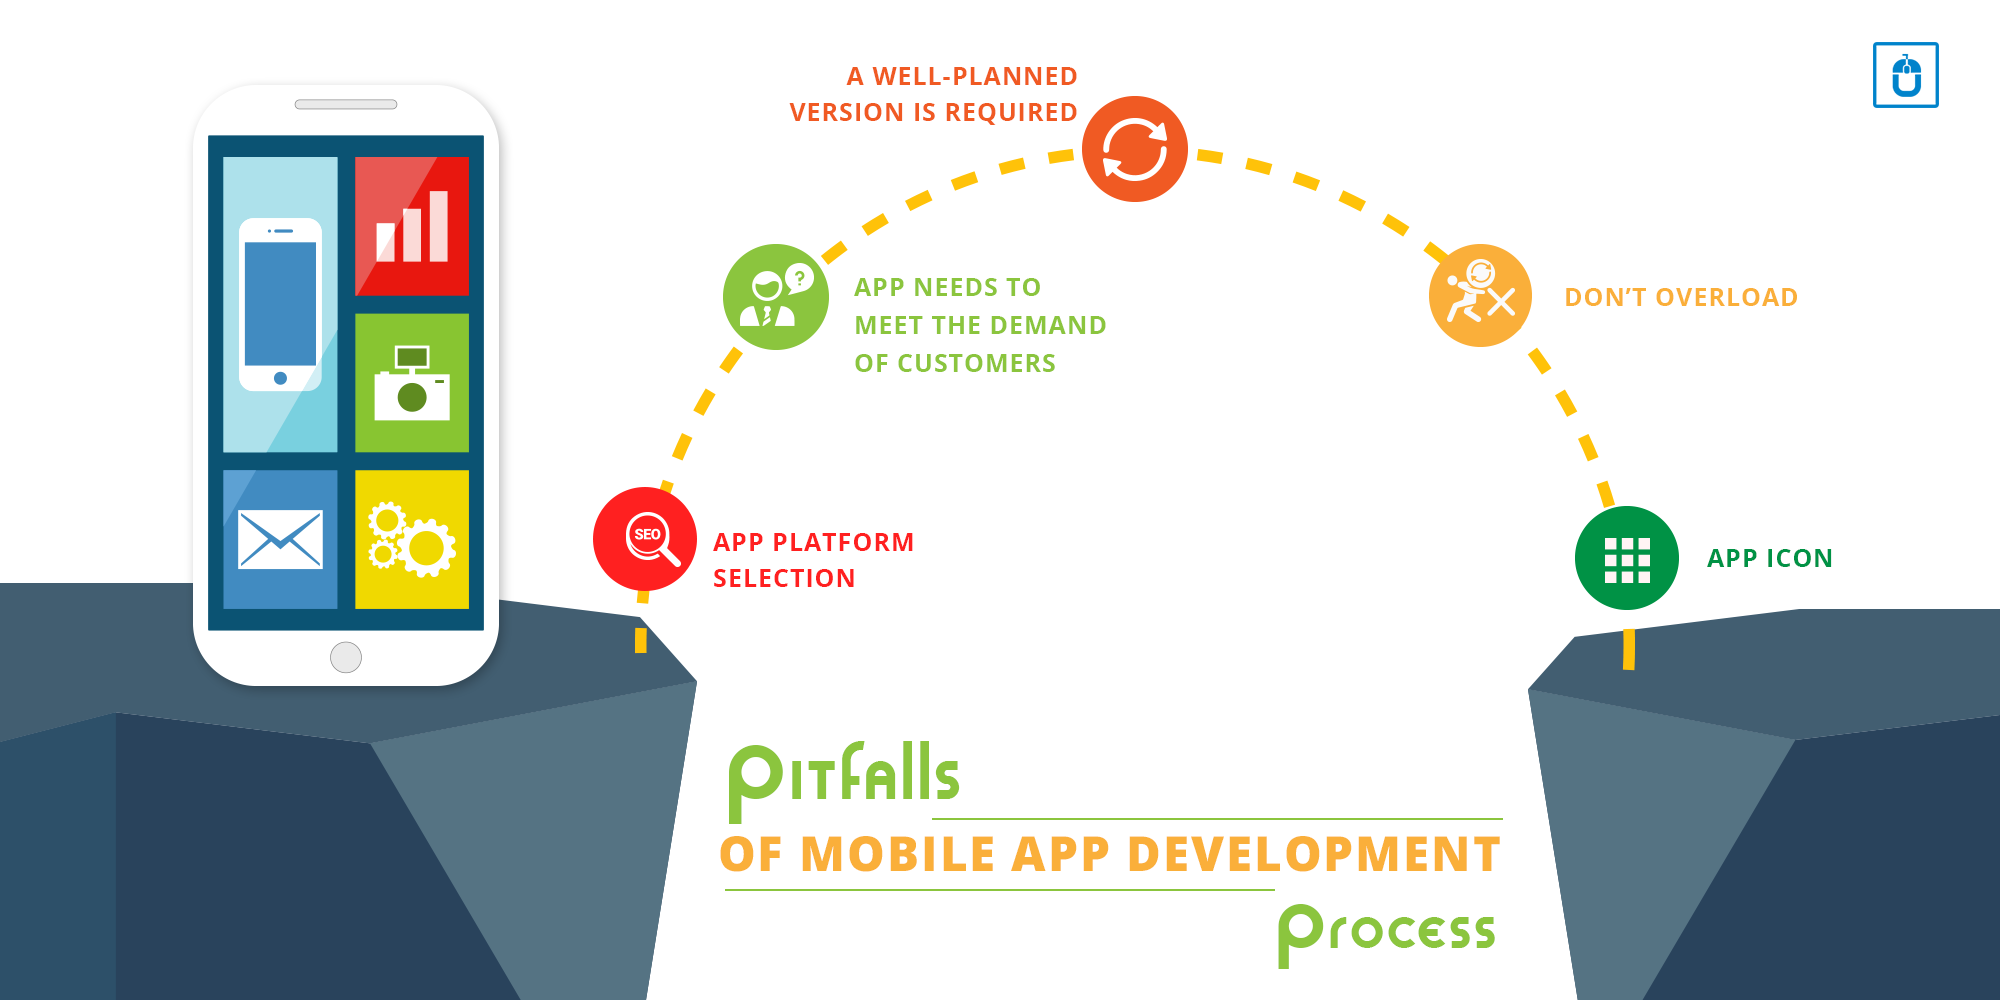 Pitfalls of Mobile App Development Process